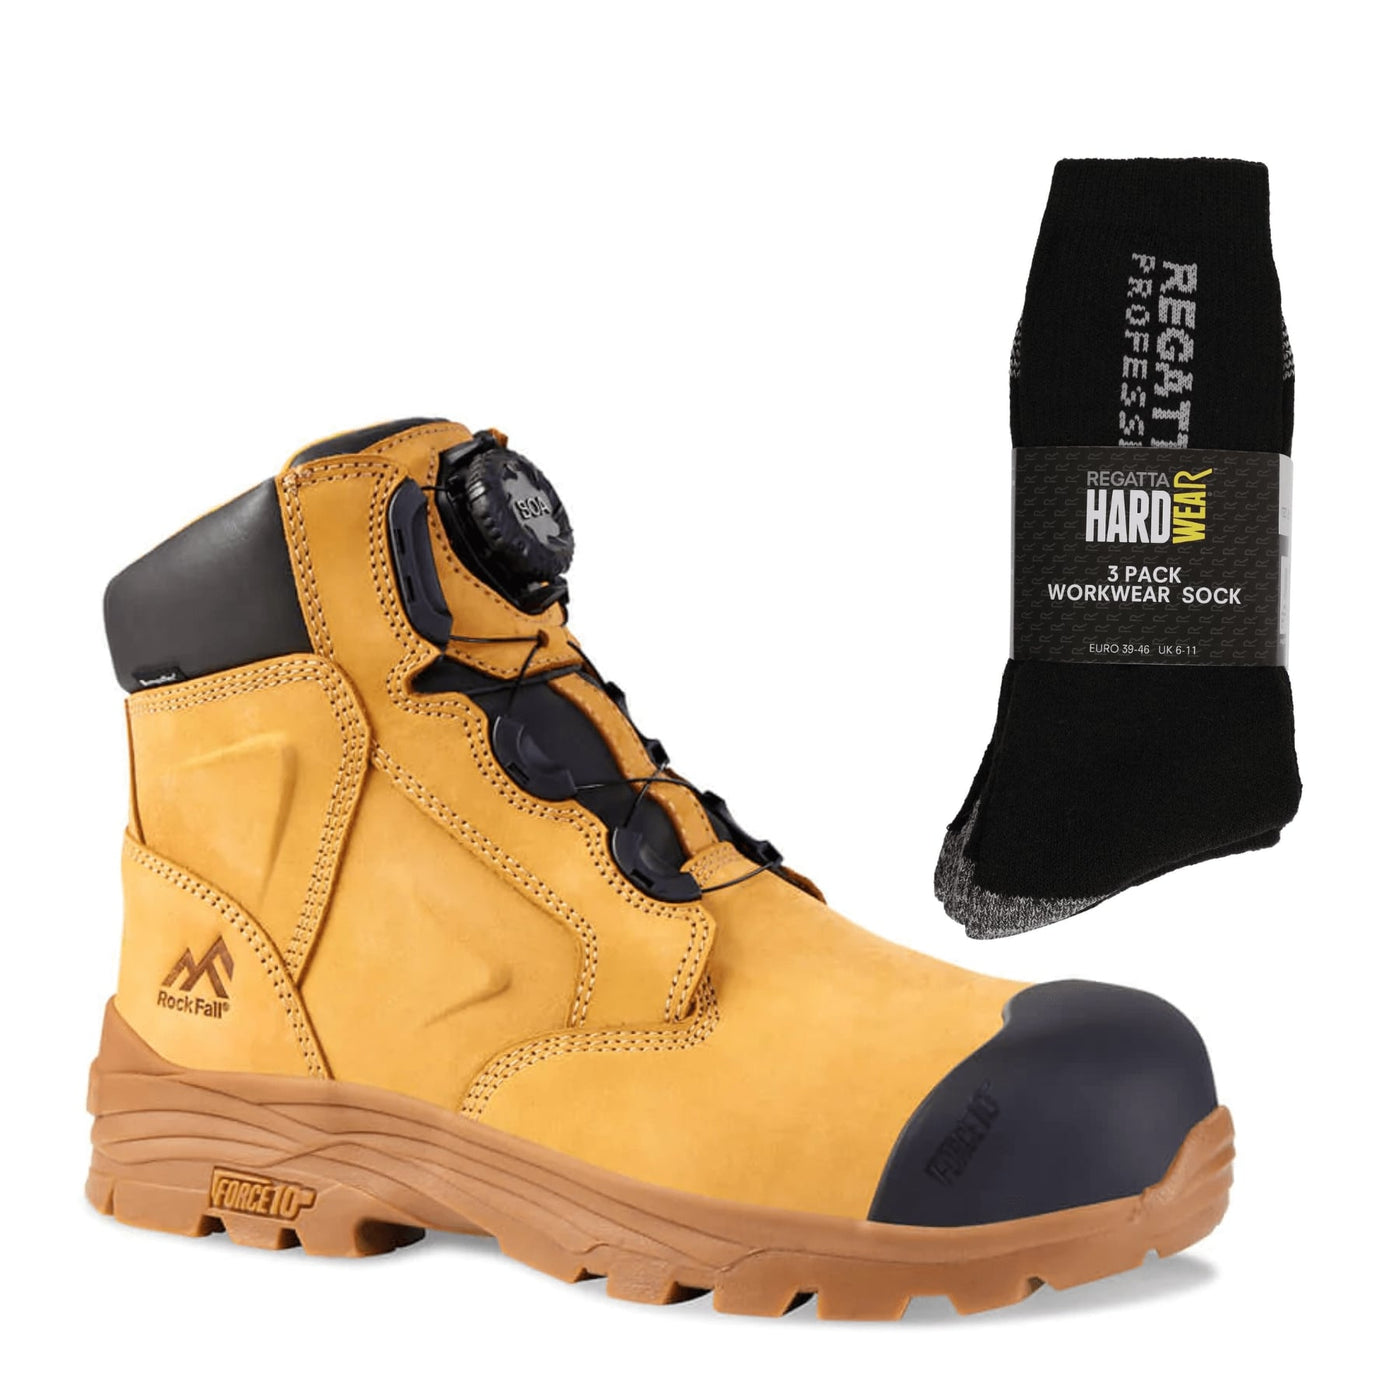 RockFall Honeystone RF610 Special Offer Pack - Waterproof BOA Work Boots + 3 Pairs Work Socks